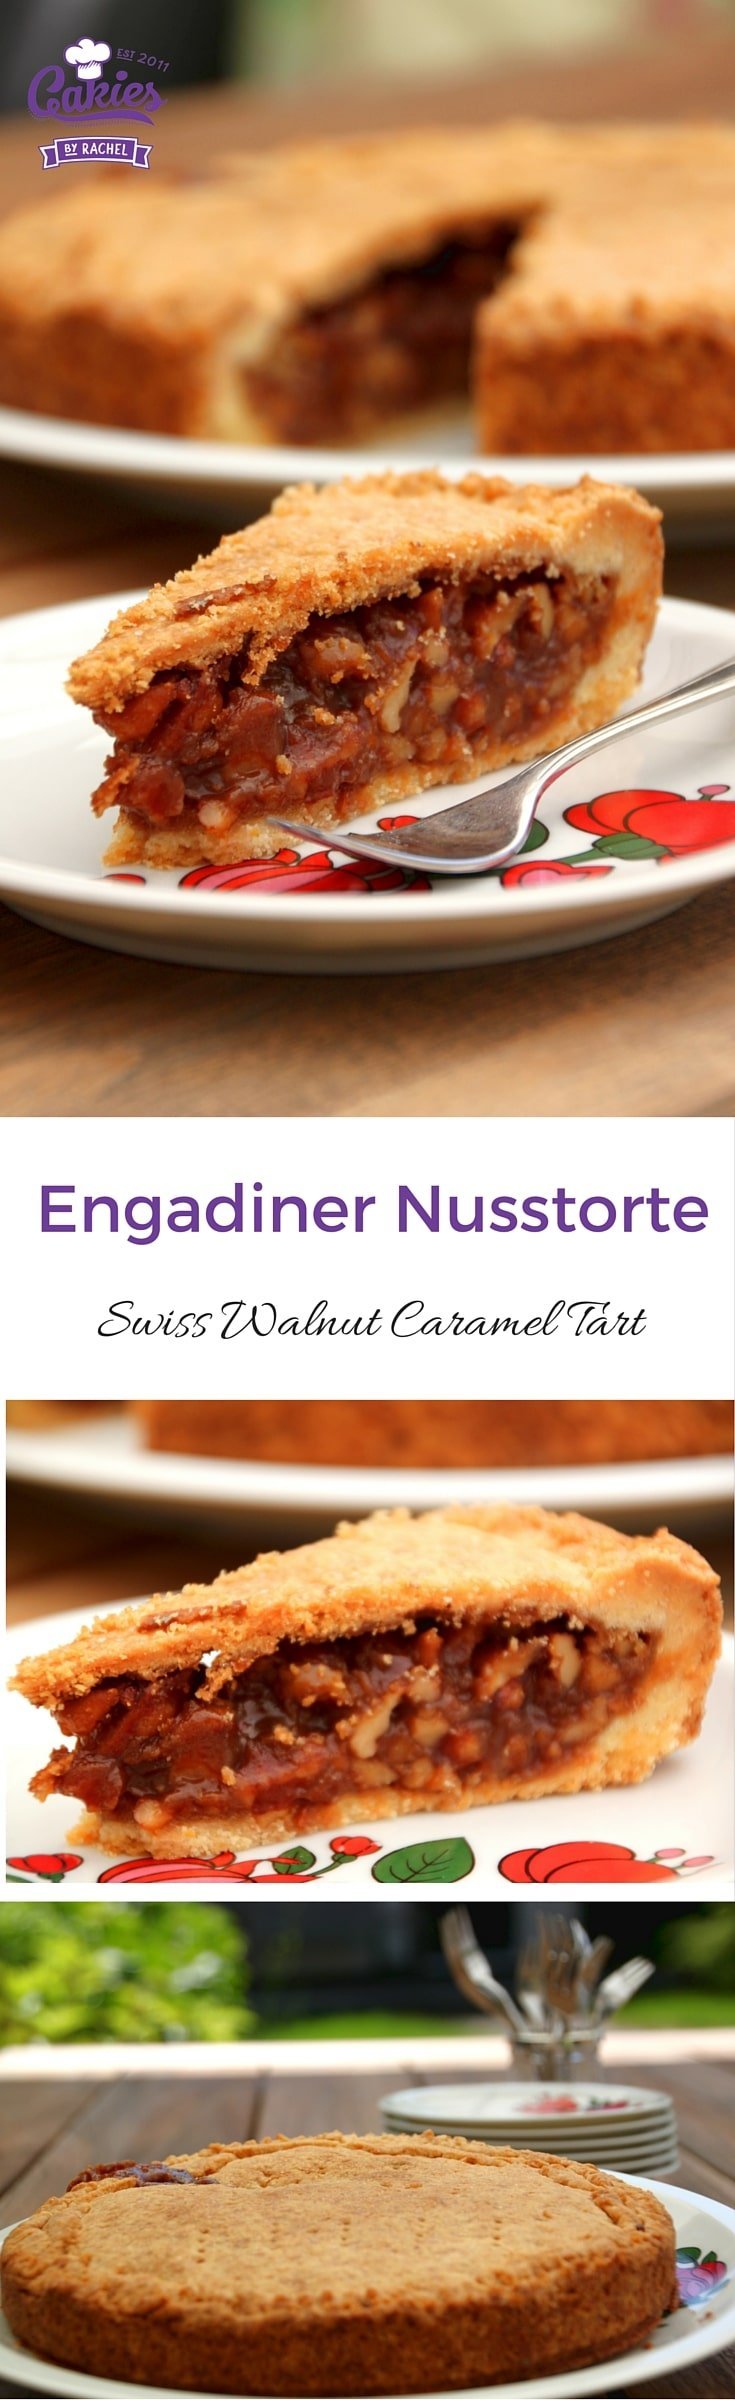 Engadiner Nusstorte Recipe - A delicious Swiss, Walnut Caramel Tart